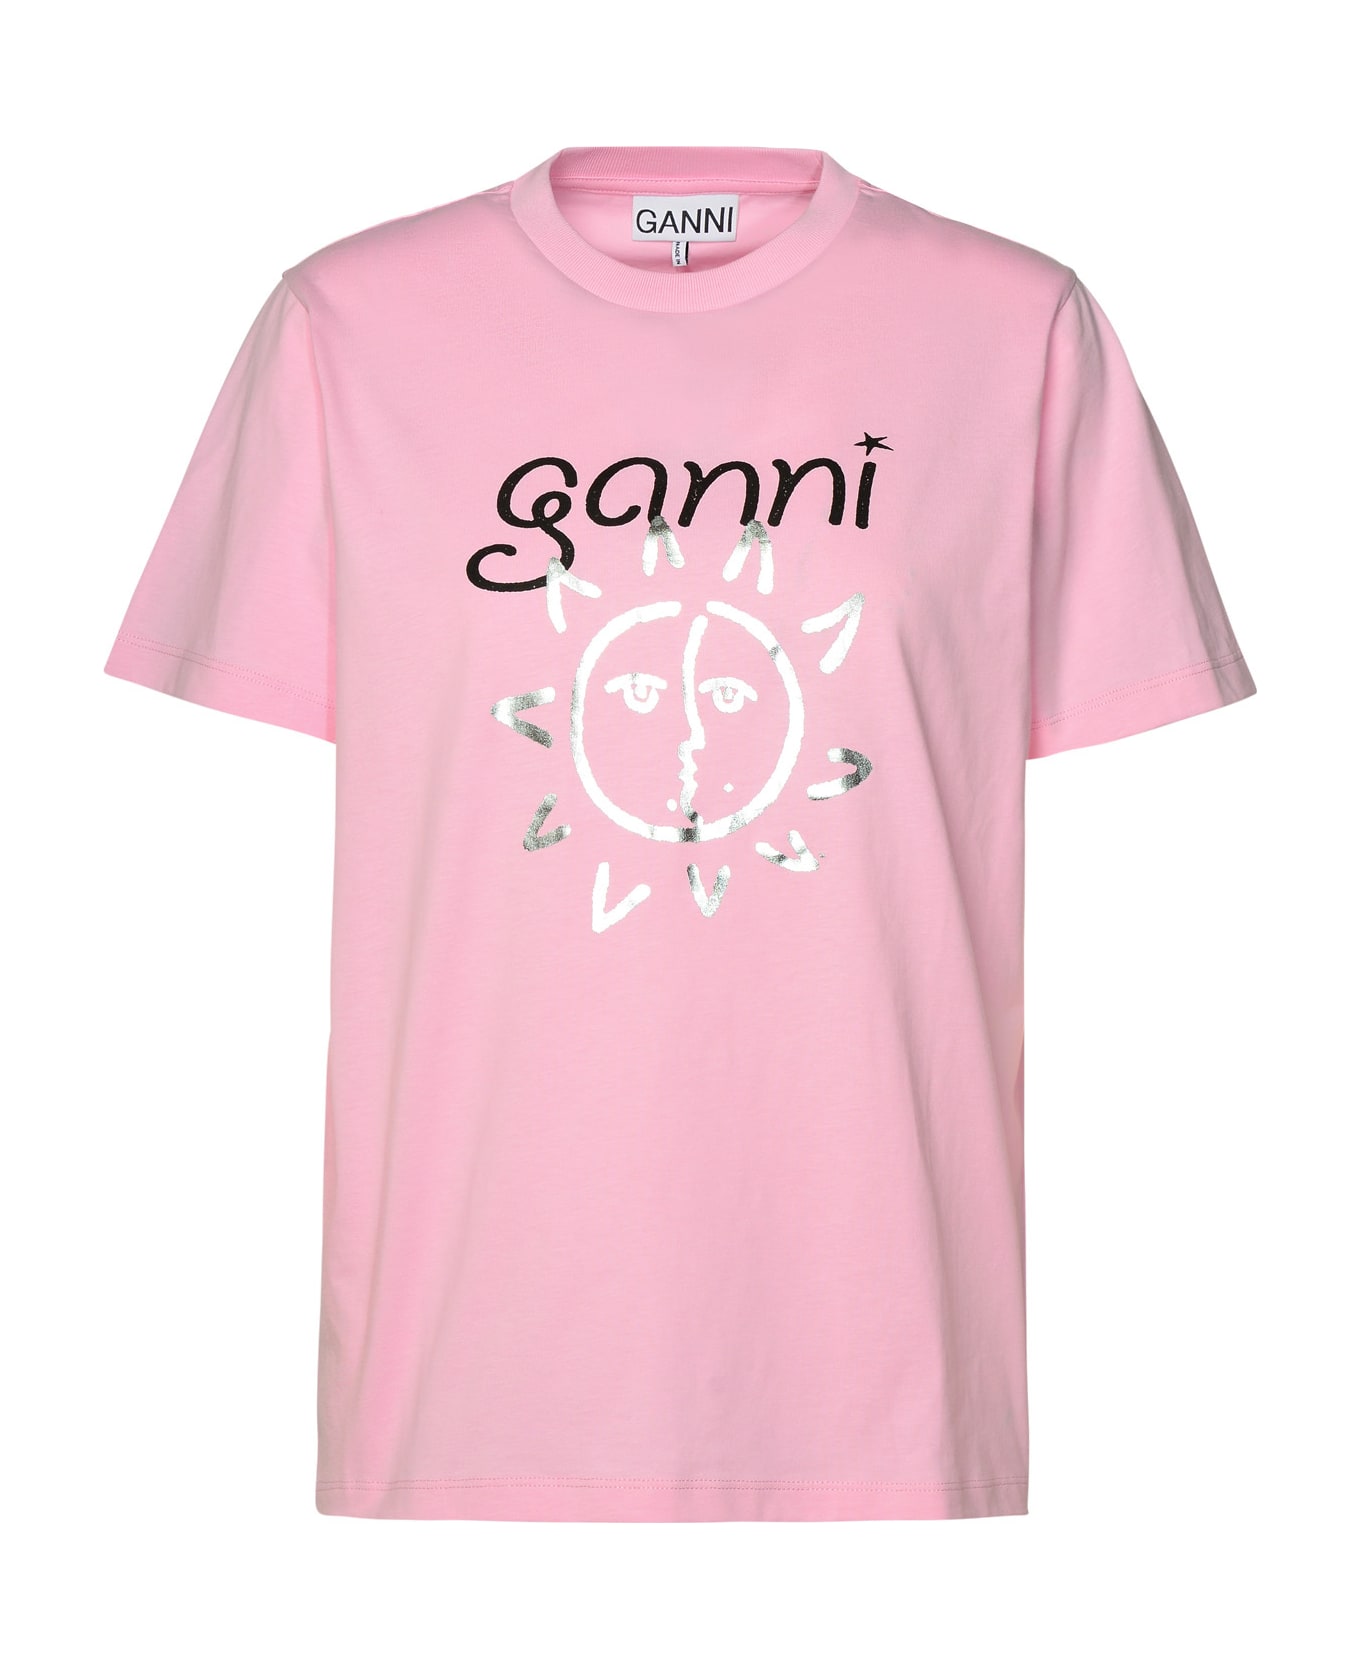 Ganni Pink Cotton T-shirt - Lilla